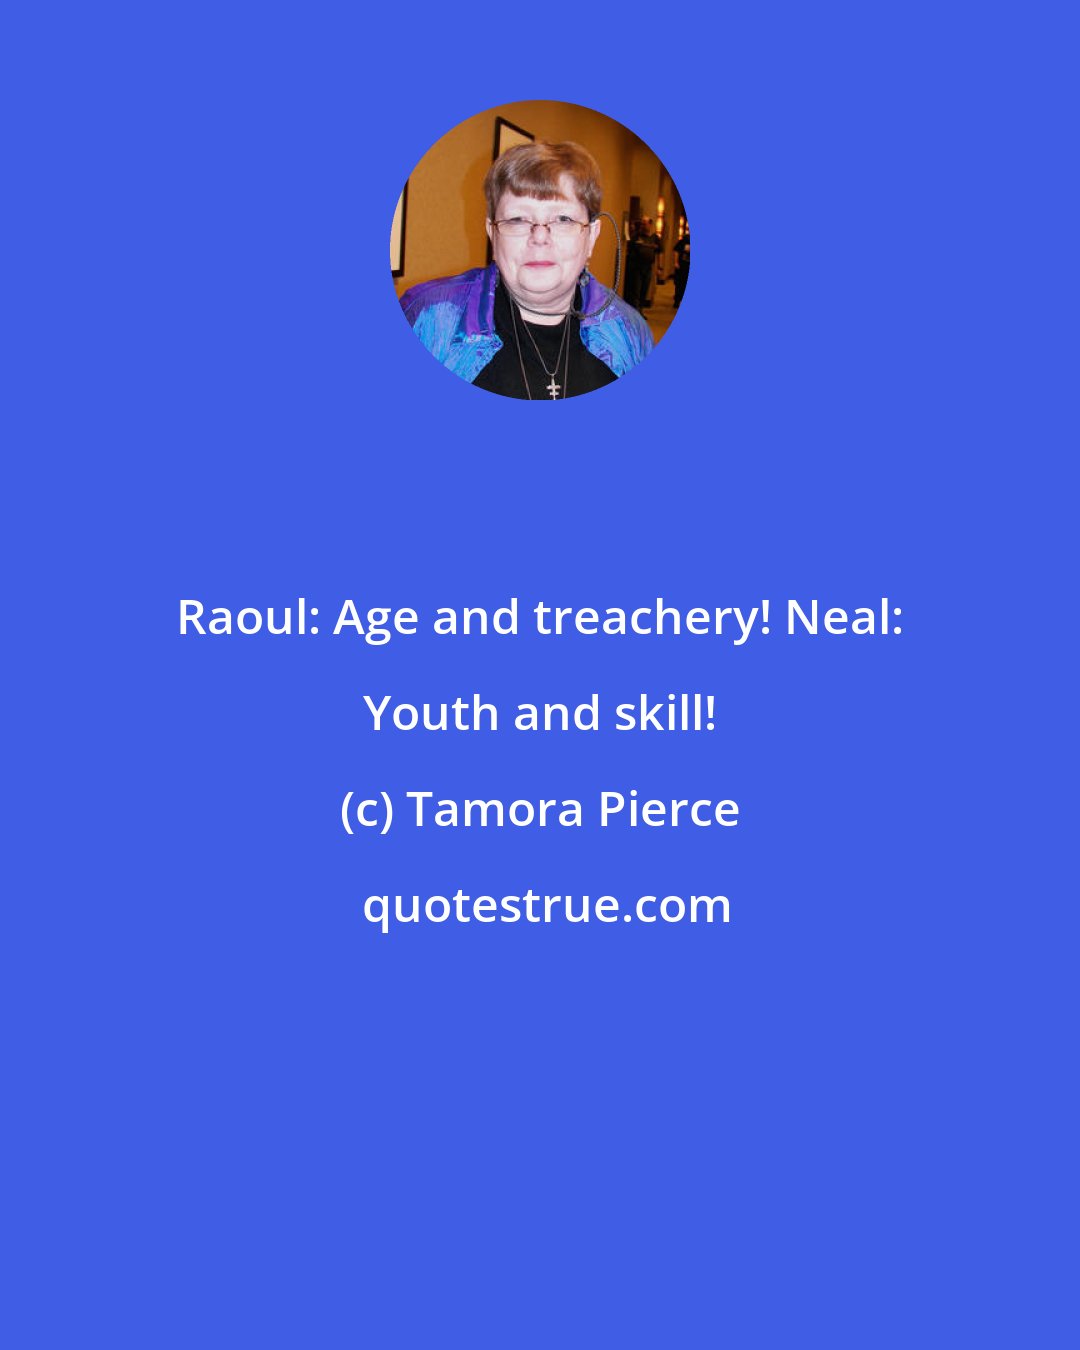 Tamora Pierce: Raoul: Age and treachery! Neal: Youth and skill!